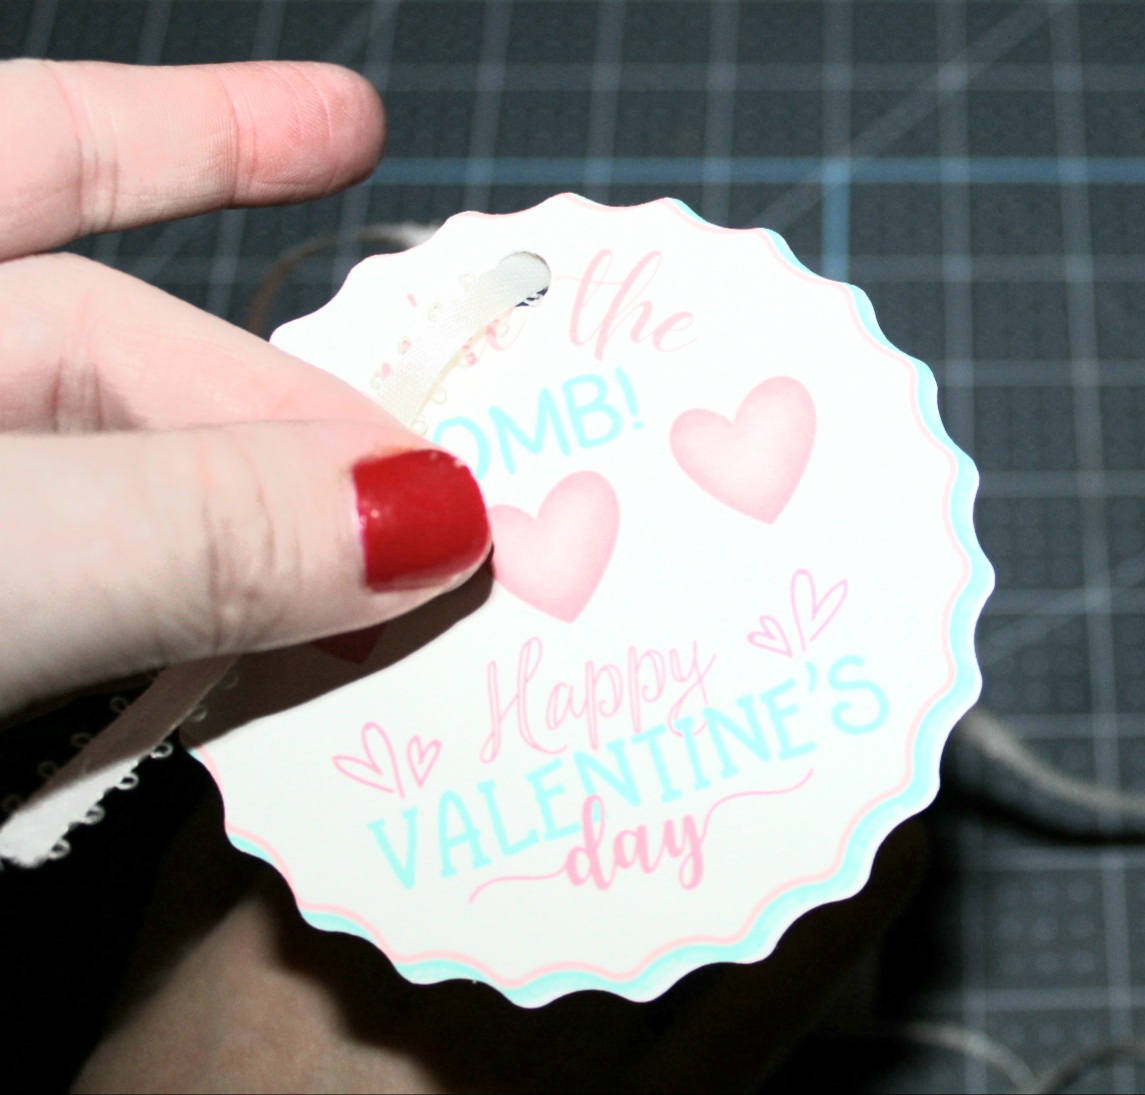 Feeding white ribbon through the Valentine's Day teacher's gift tag.